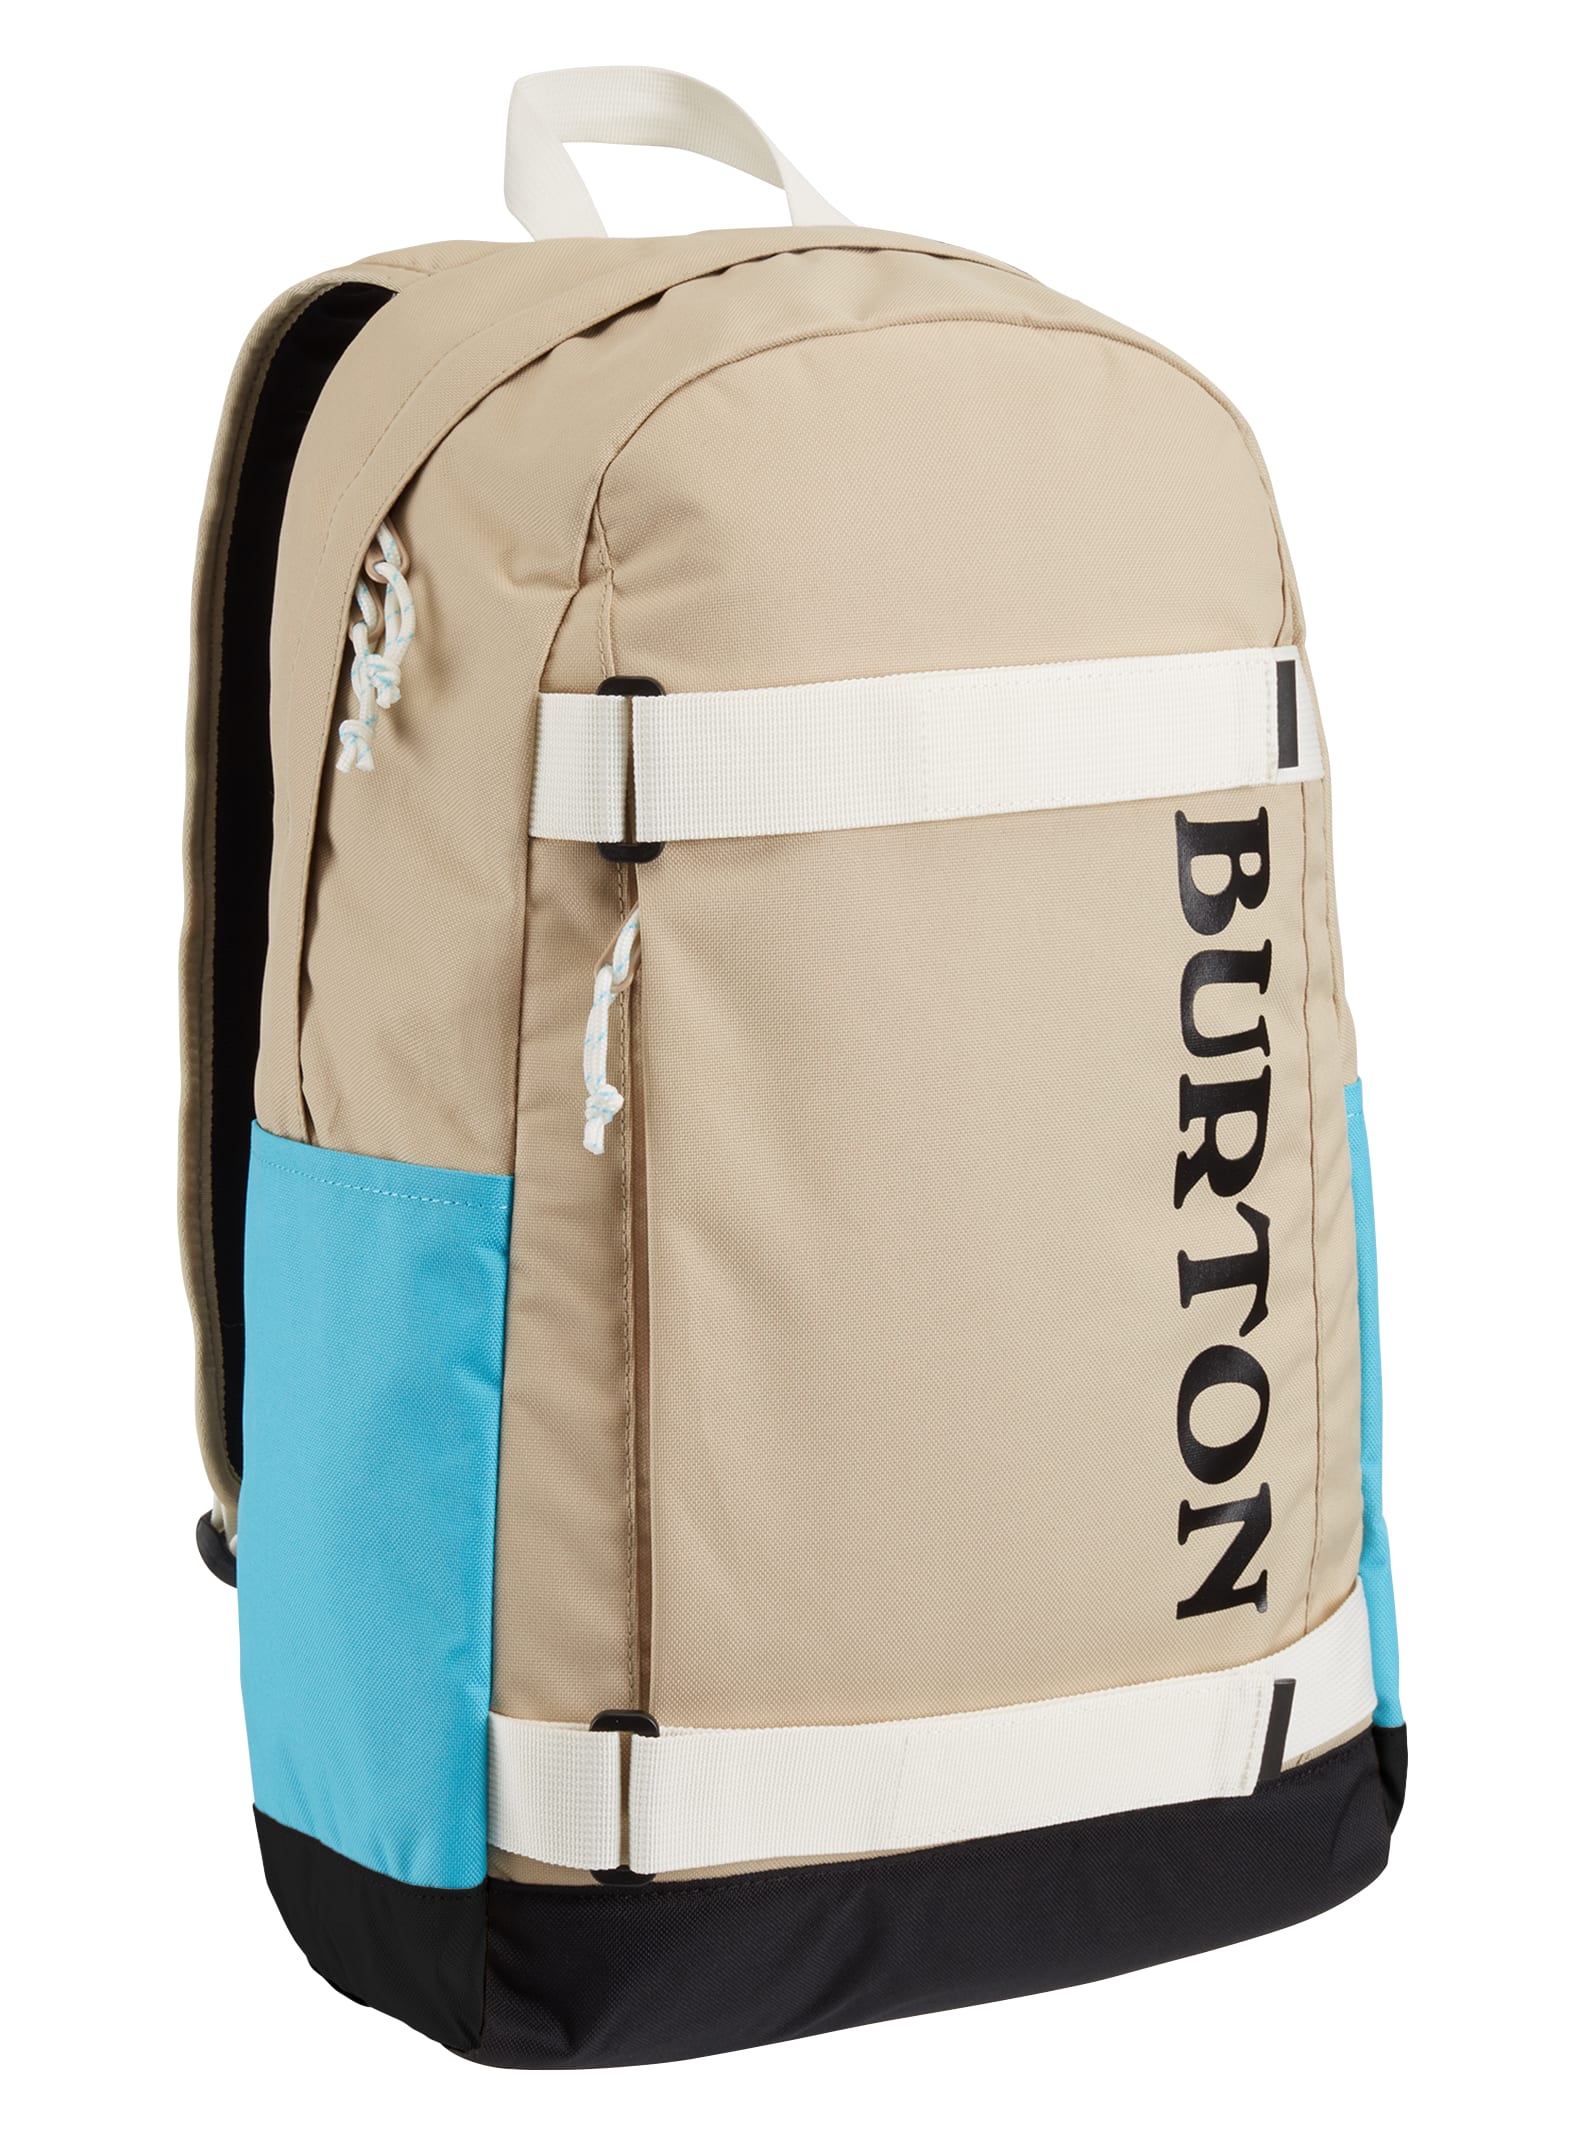 Burton Emphasis 2.0 26L Backpack | Burton.com Spring 2021 US